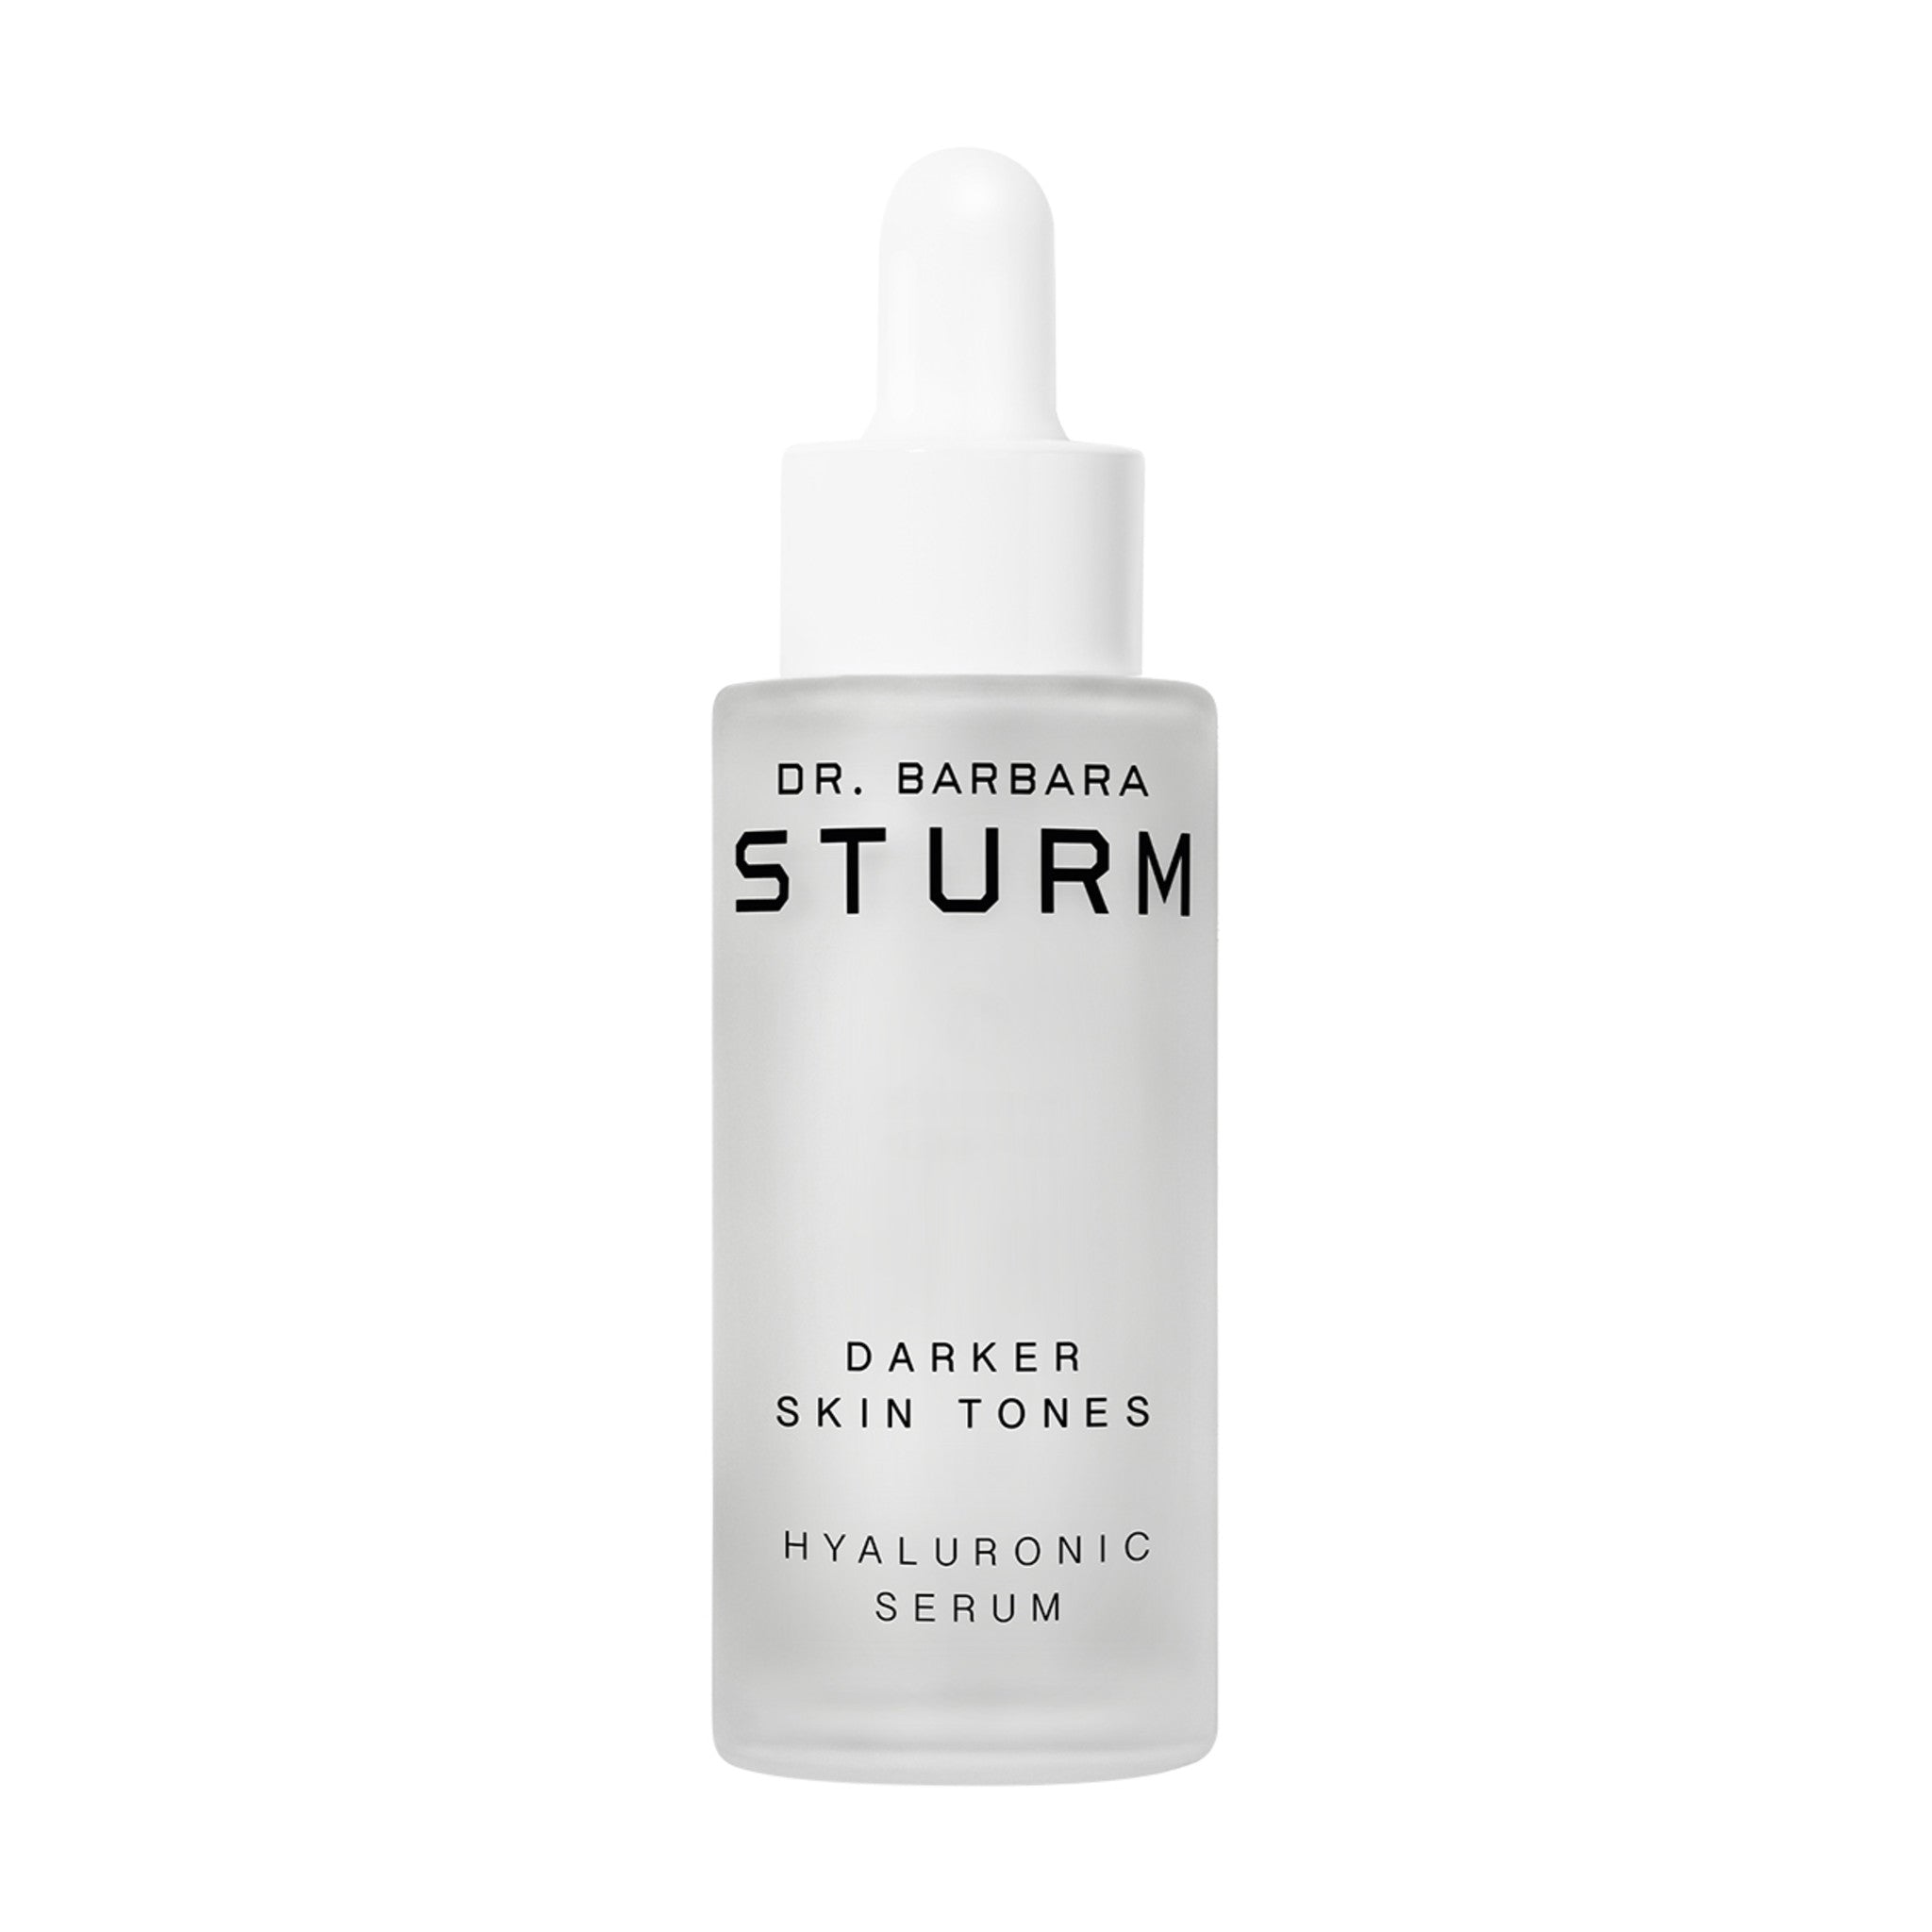 Dr. Barbara Sturm Darker Skin Tones Hyaluronic Serum main image.